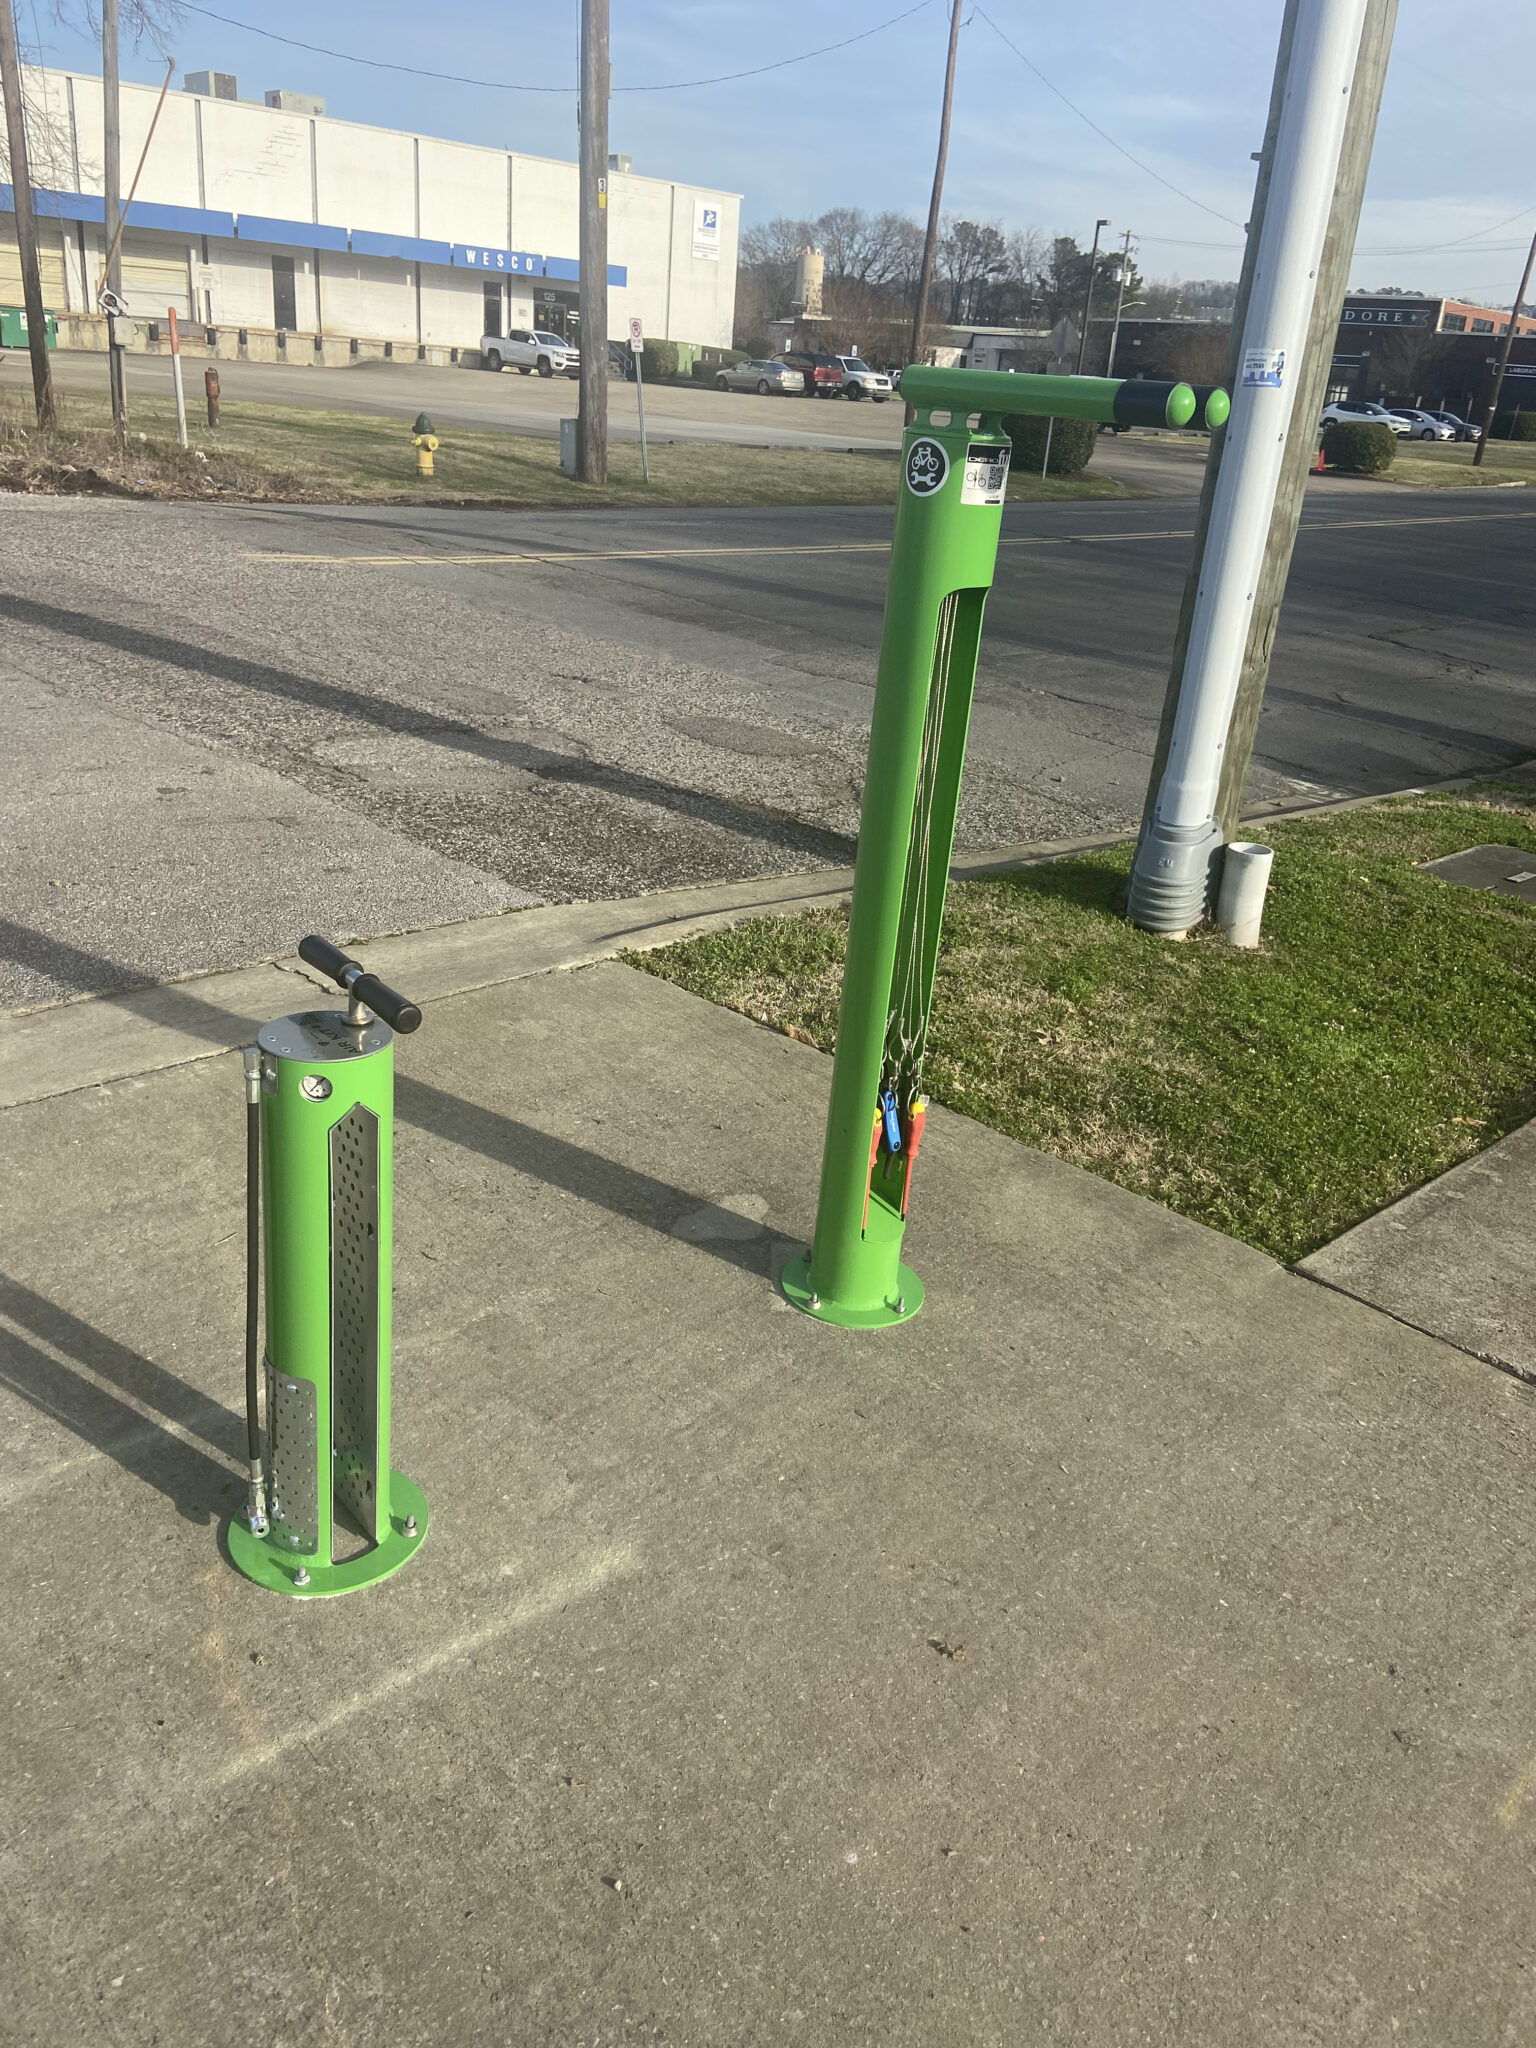 IMG 3546 NEW: 7 helpful bike maintenance stations installed across Birmingham—learn more